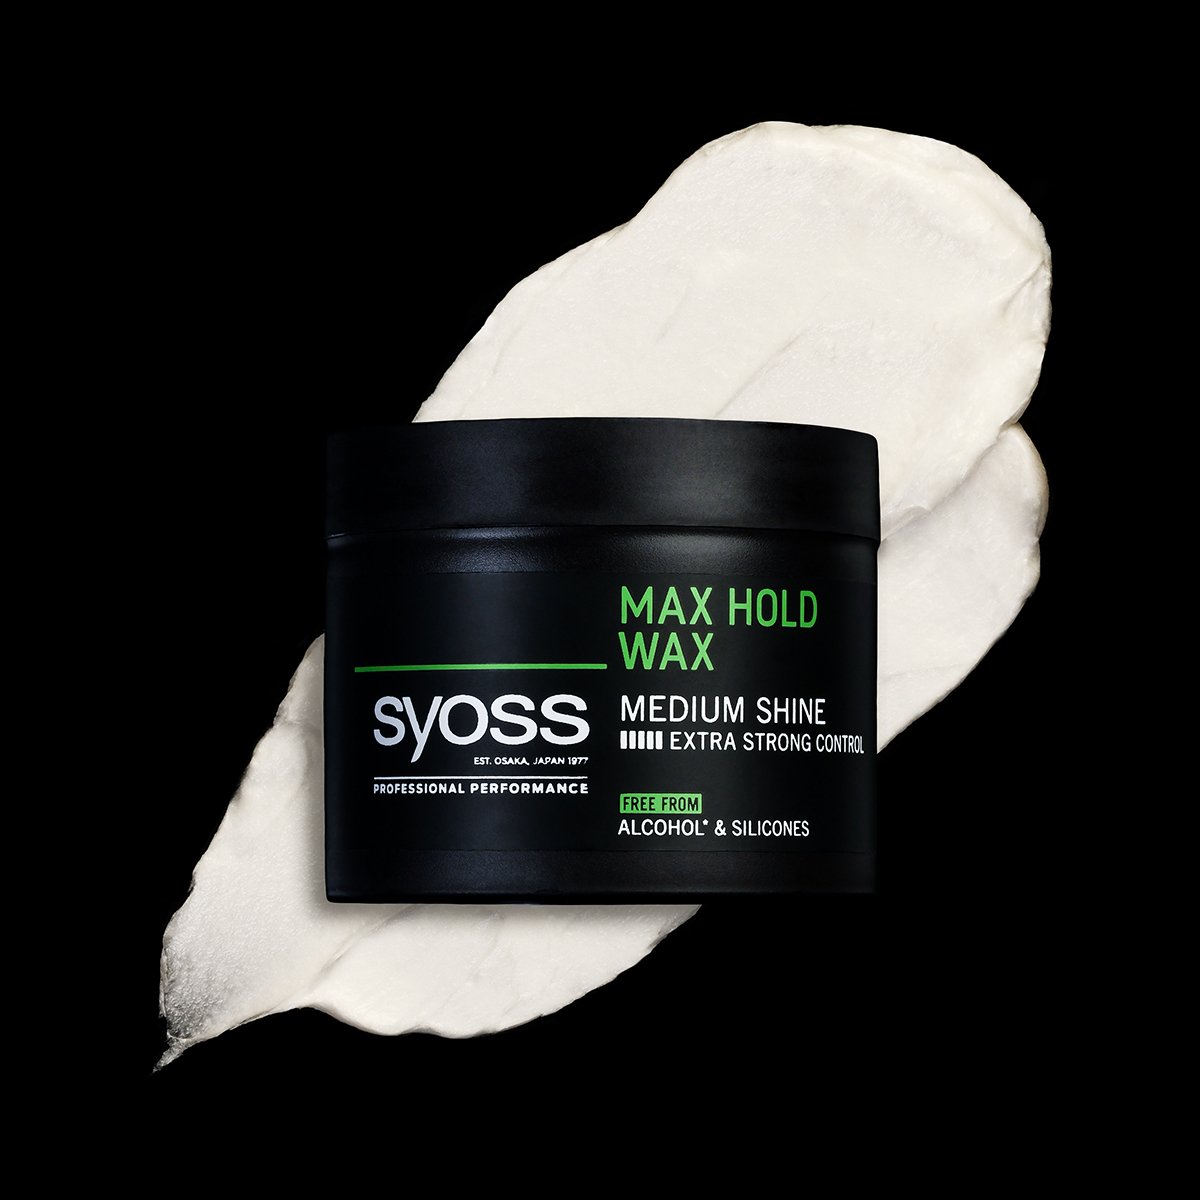 Воск для укладки волос Syoss Max Hold Фиксация 5, 150 мл - фото 2